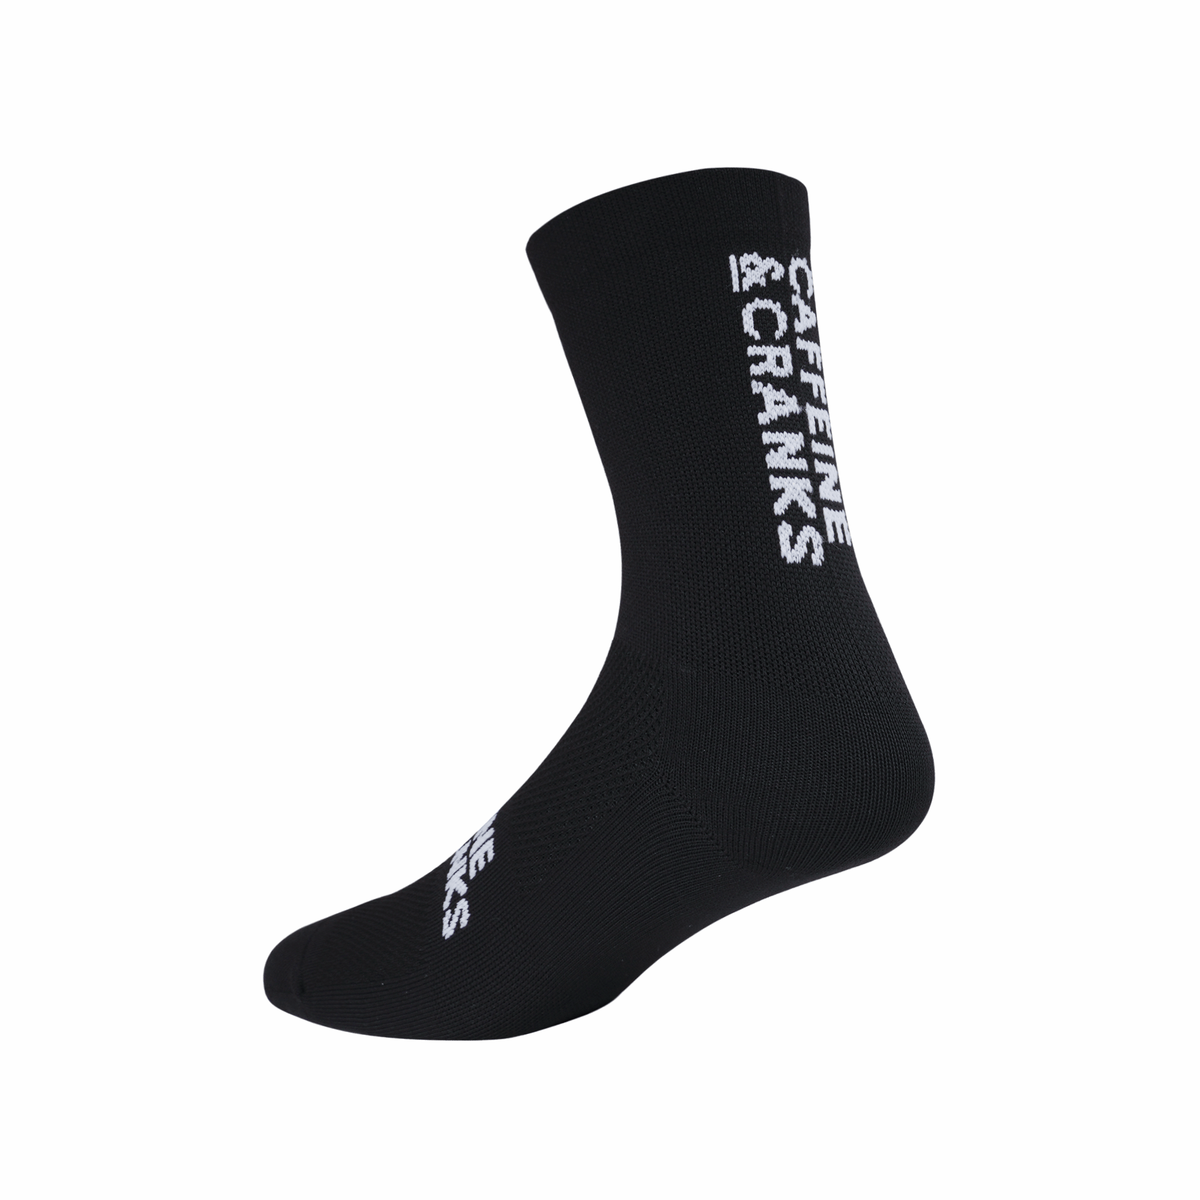 C&C Socks - Black